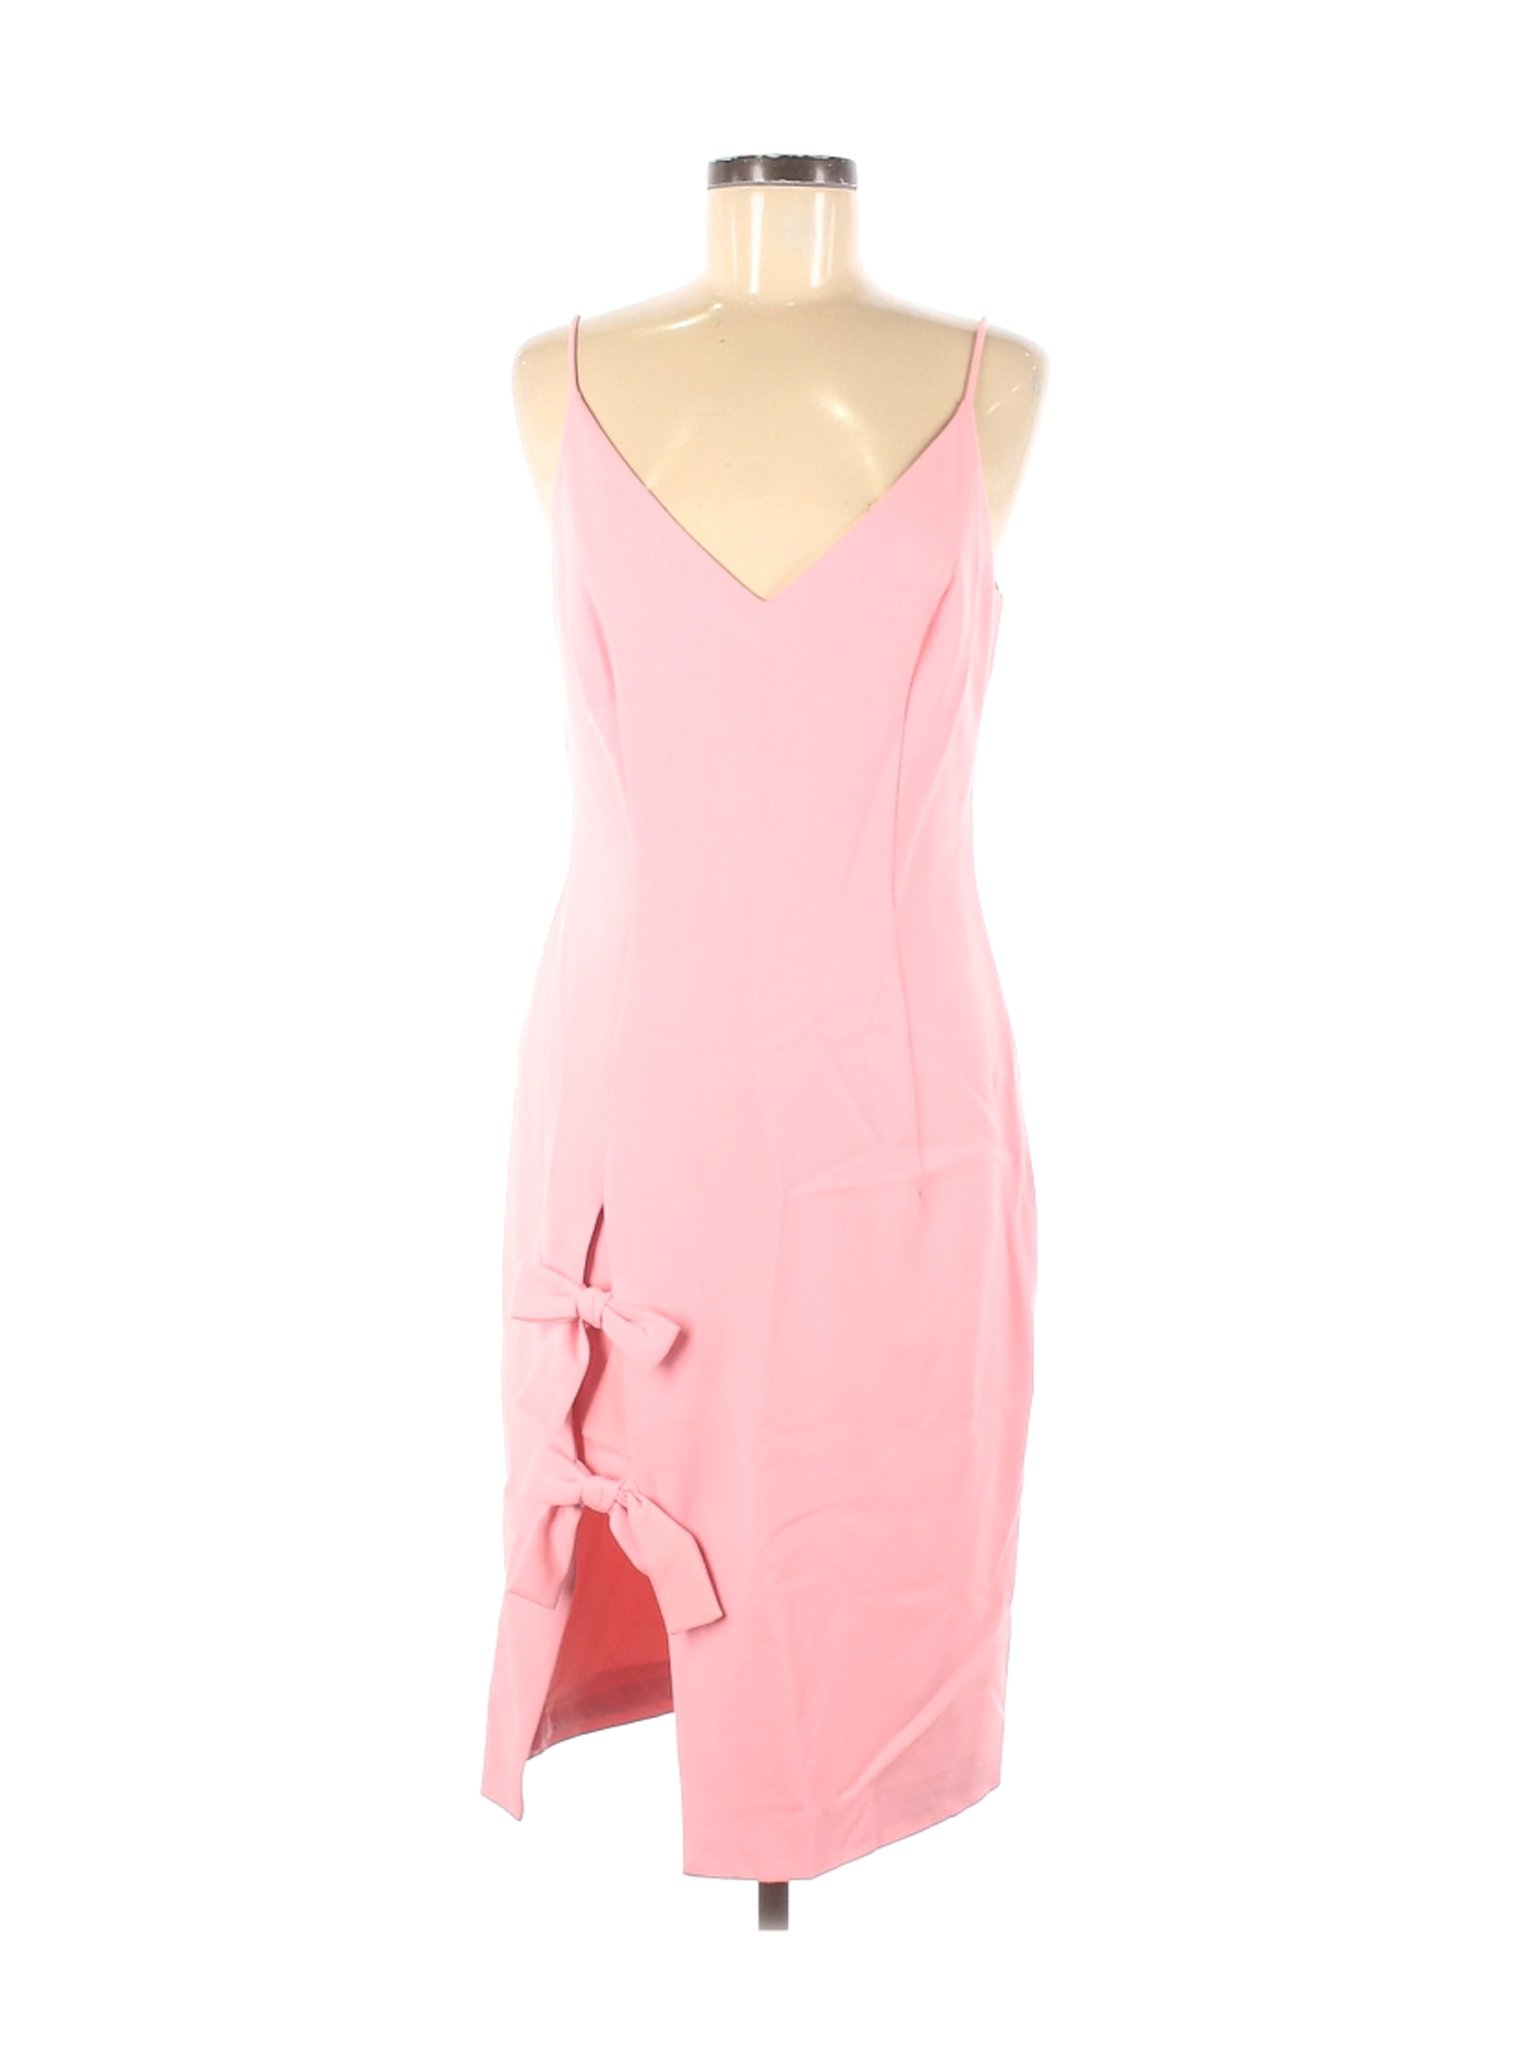 NWT Black Halo Women Pink Cocktail Dress 6 | eBay